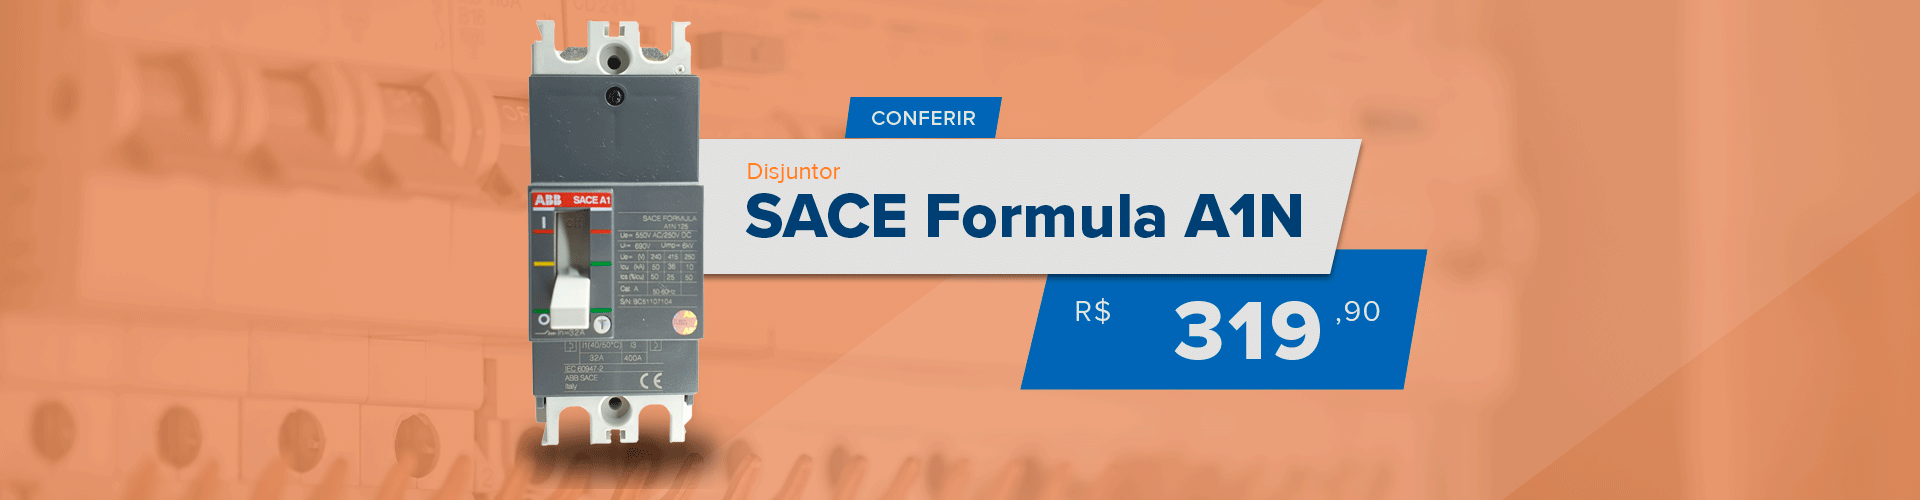 Disjuntor SACE Formula A1N